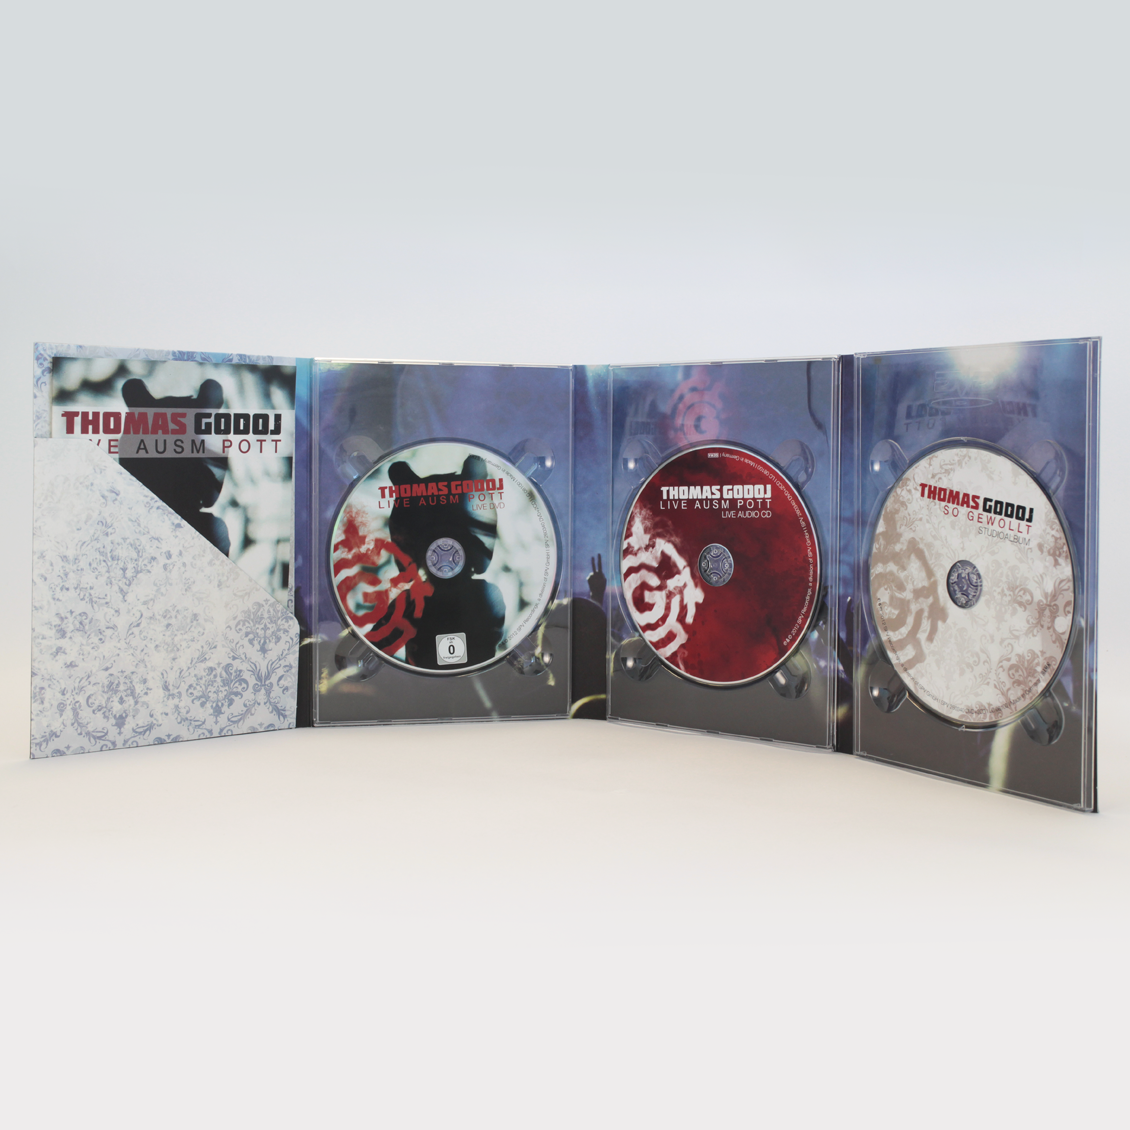 DVD/CD-BOX